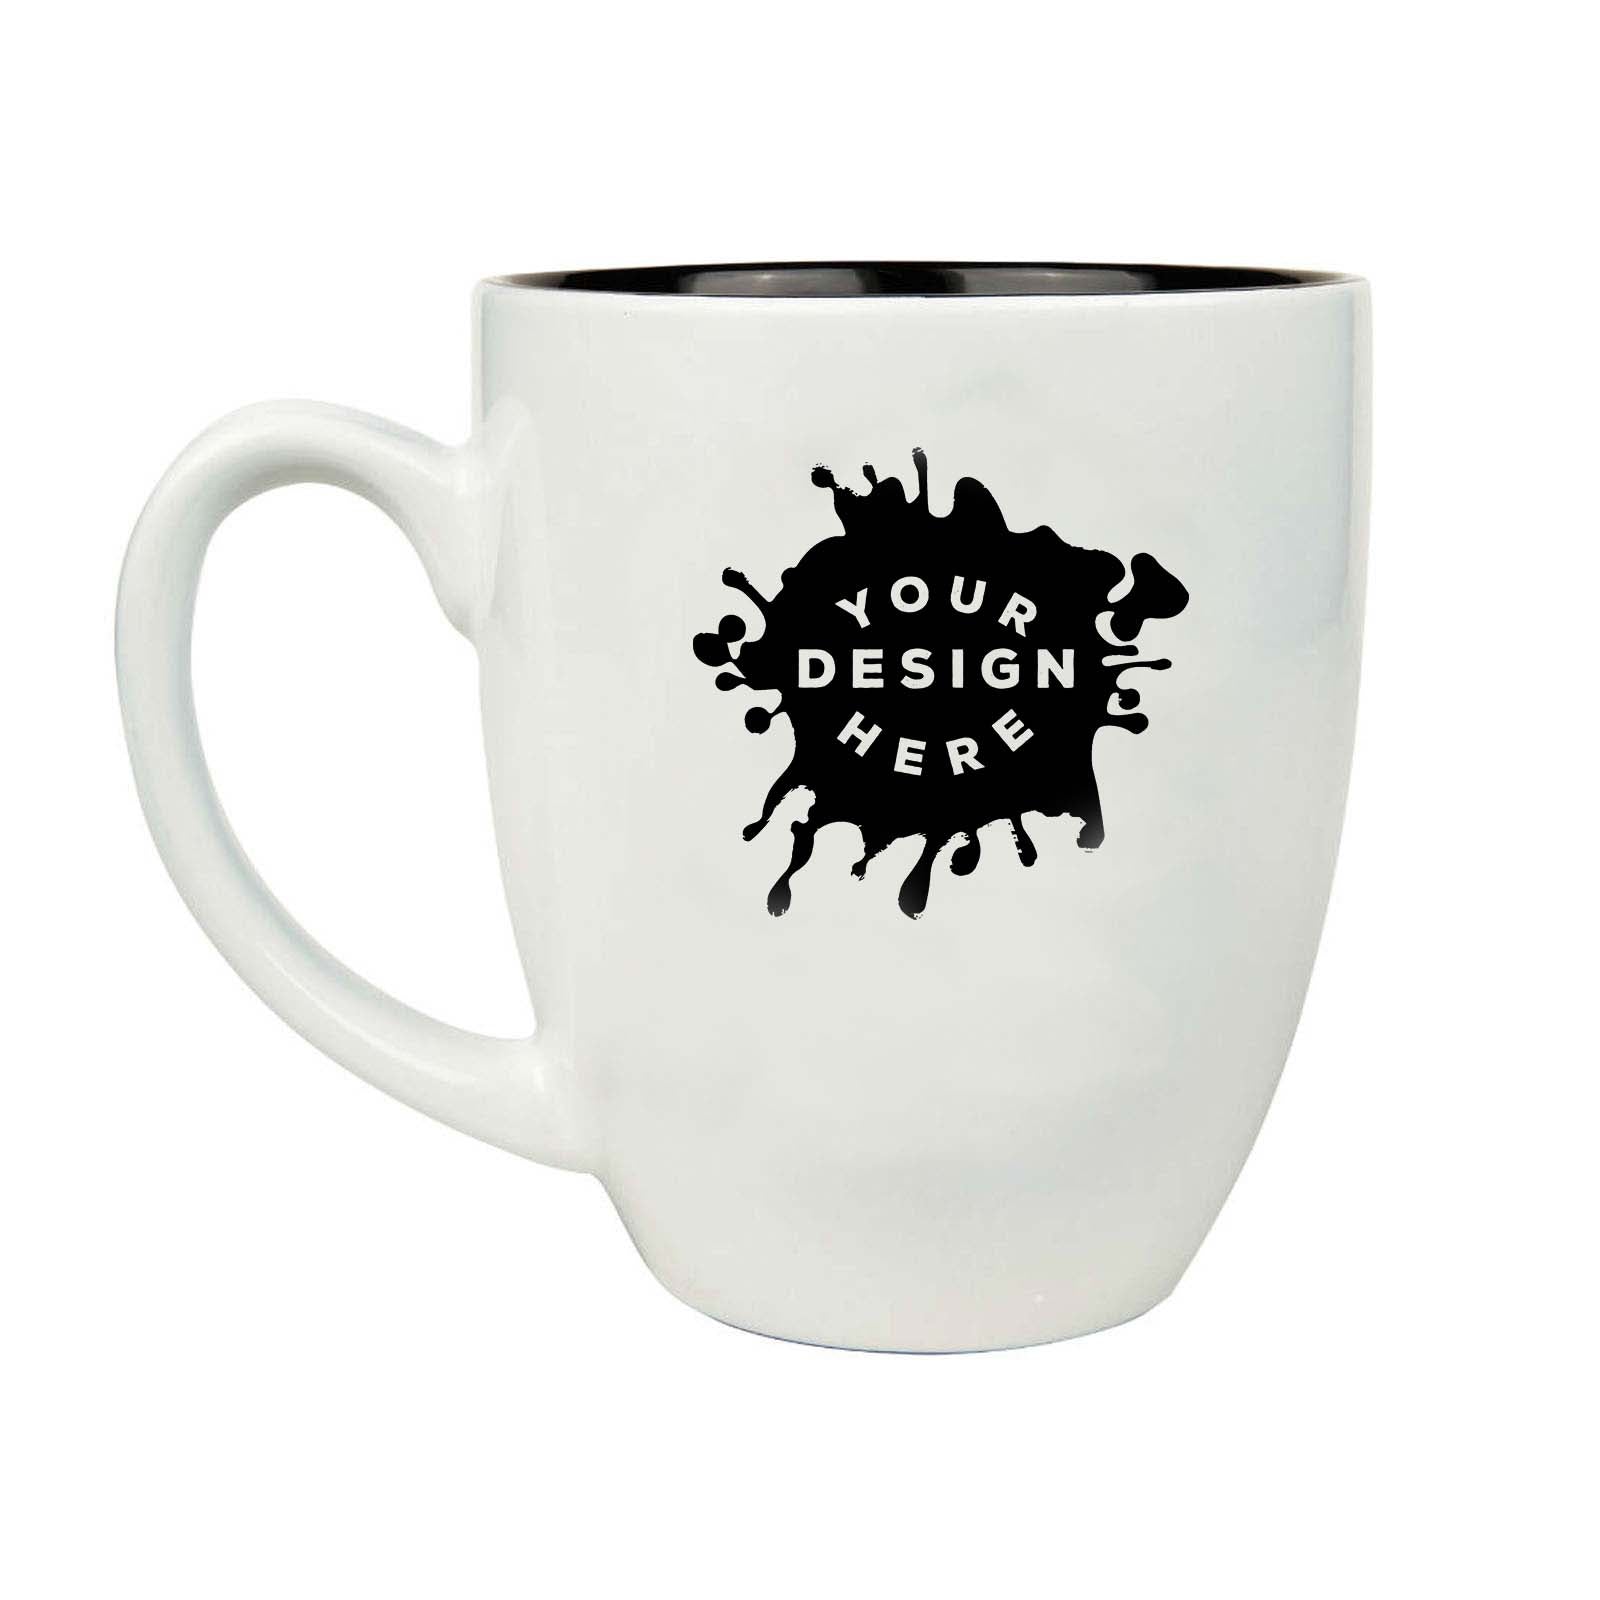 Custom mugs and Personalized mugs 400ml Ceramic Starbucks Mugs with laser  engraving design,engraved ceramic mugs order online